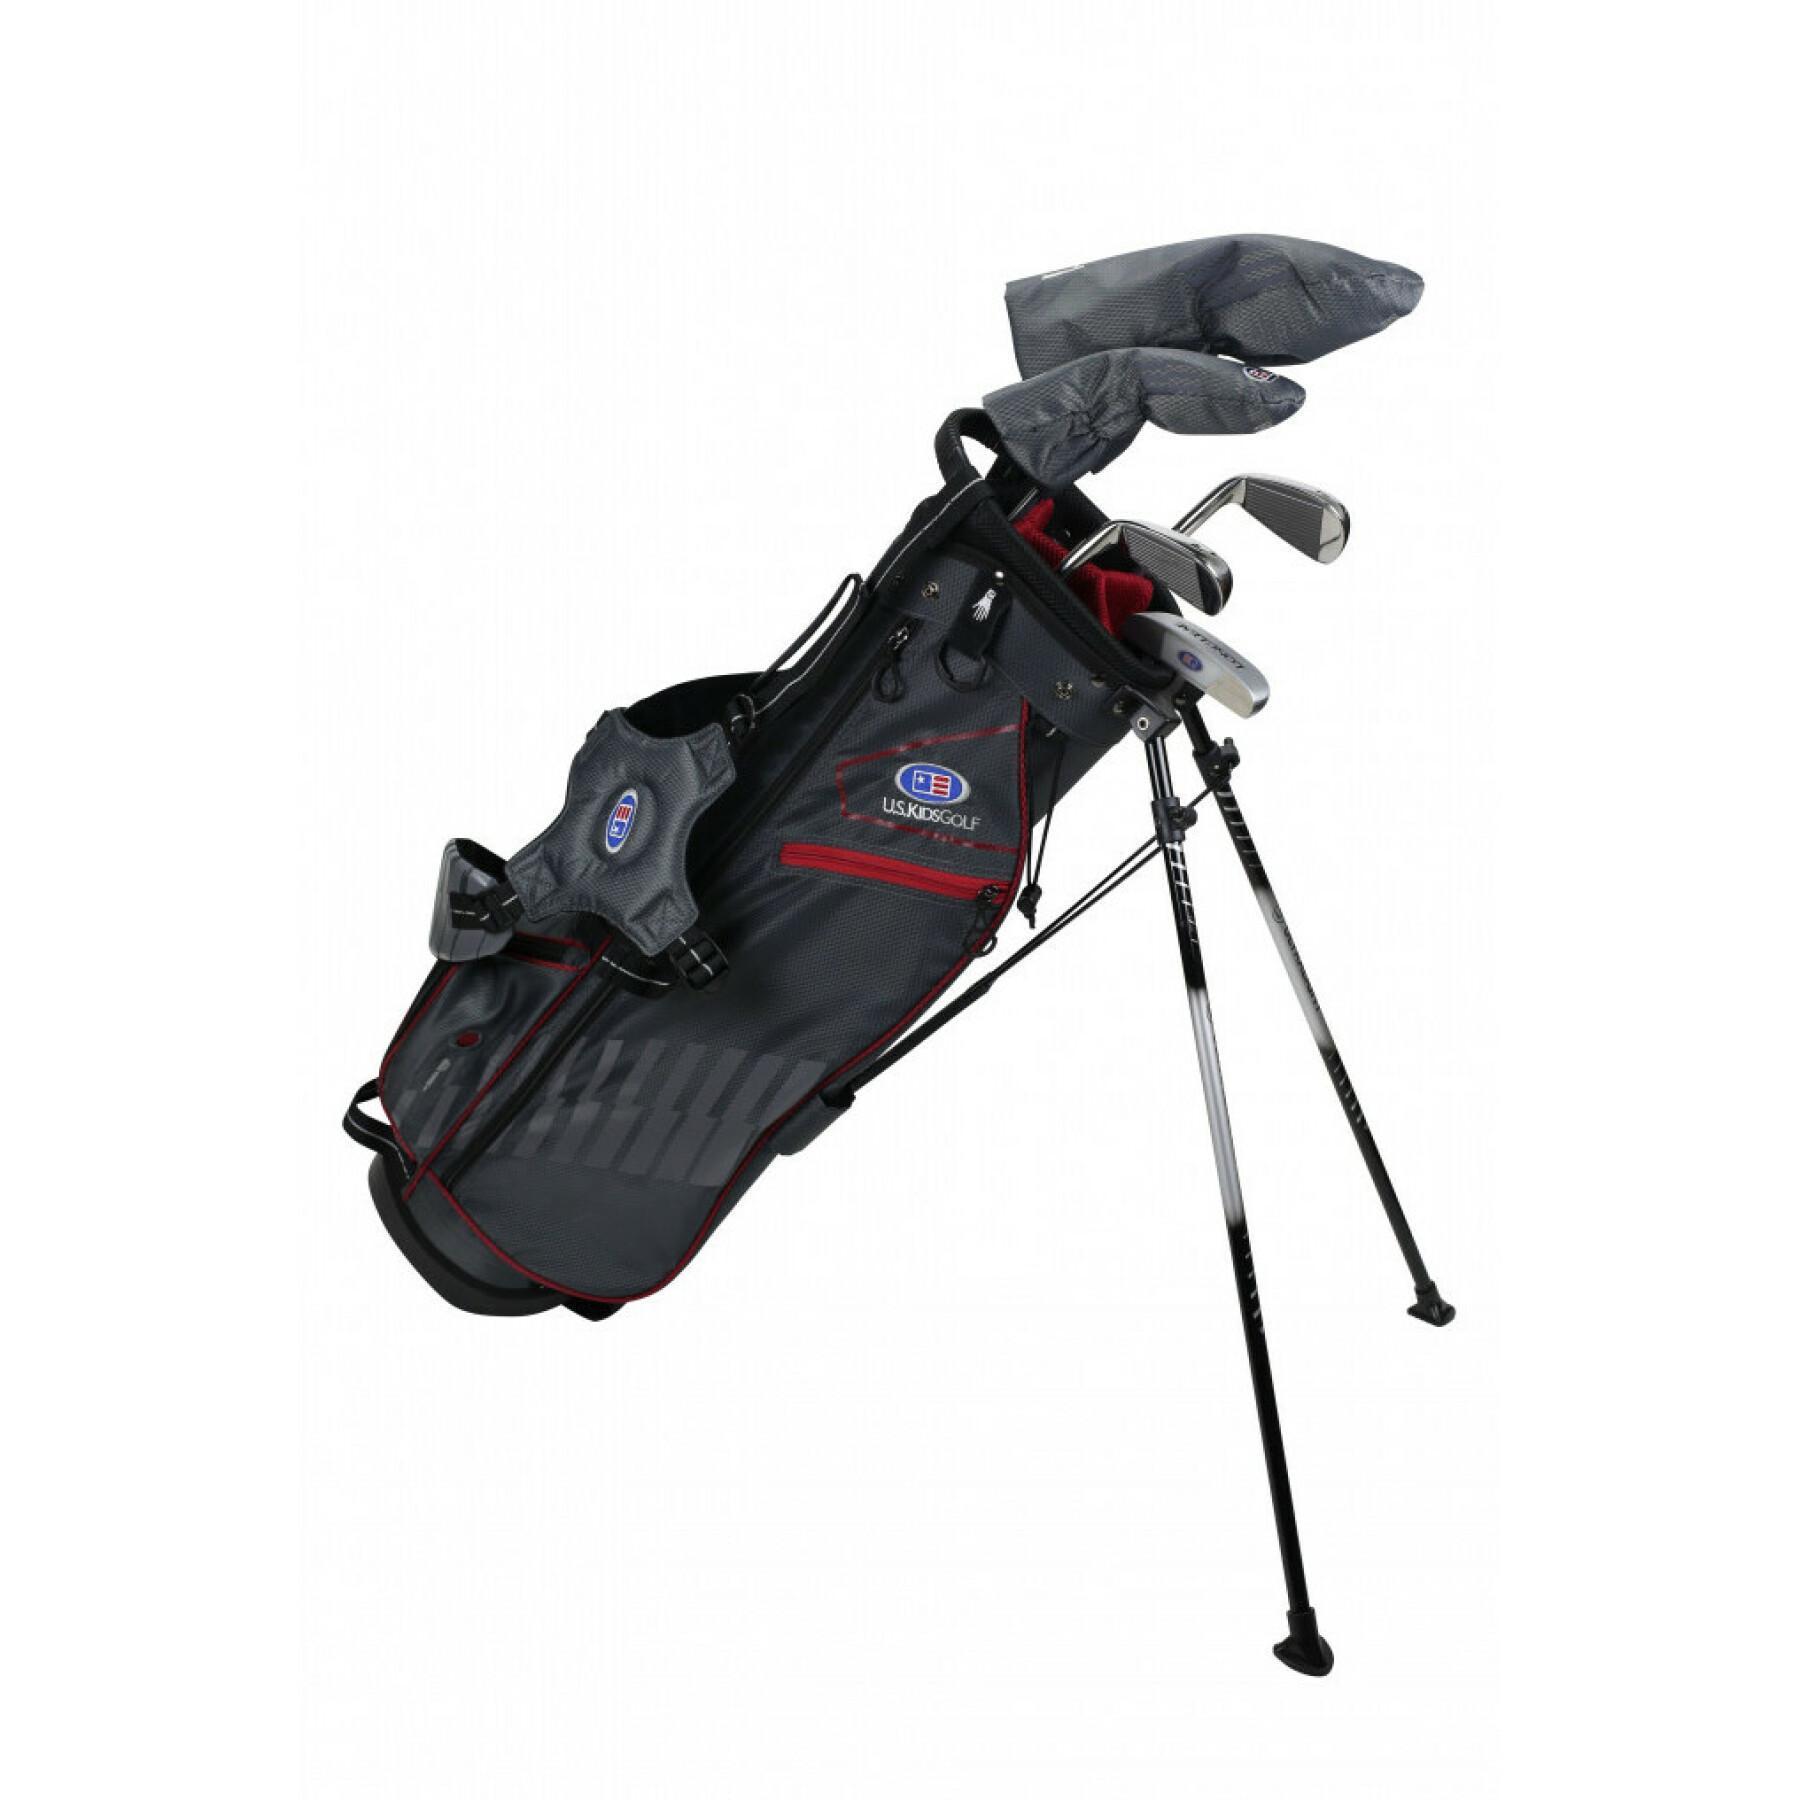 Kit (väska + 5 klubbor) högerhänt pojke U.S Kids Golf ultralight us60 2020